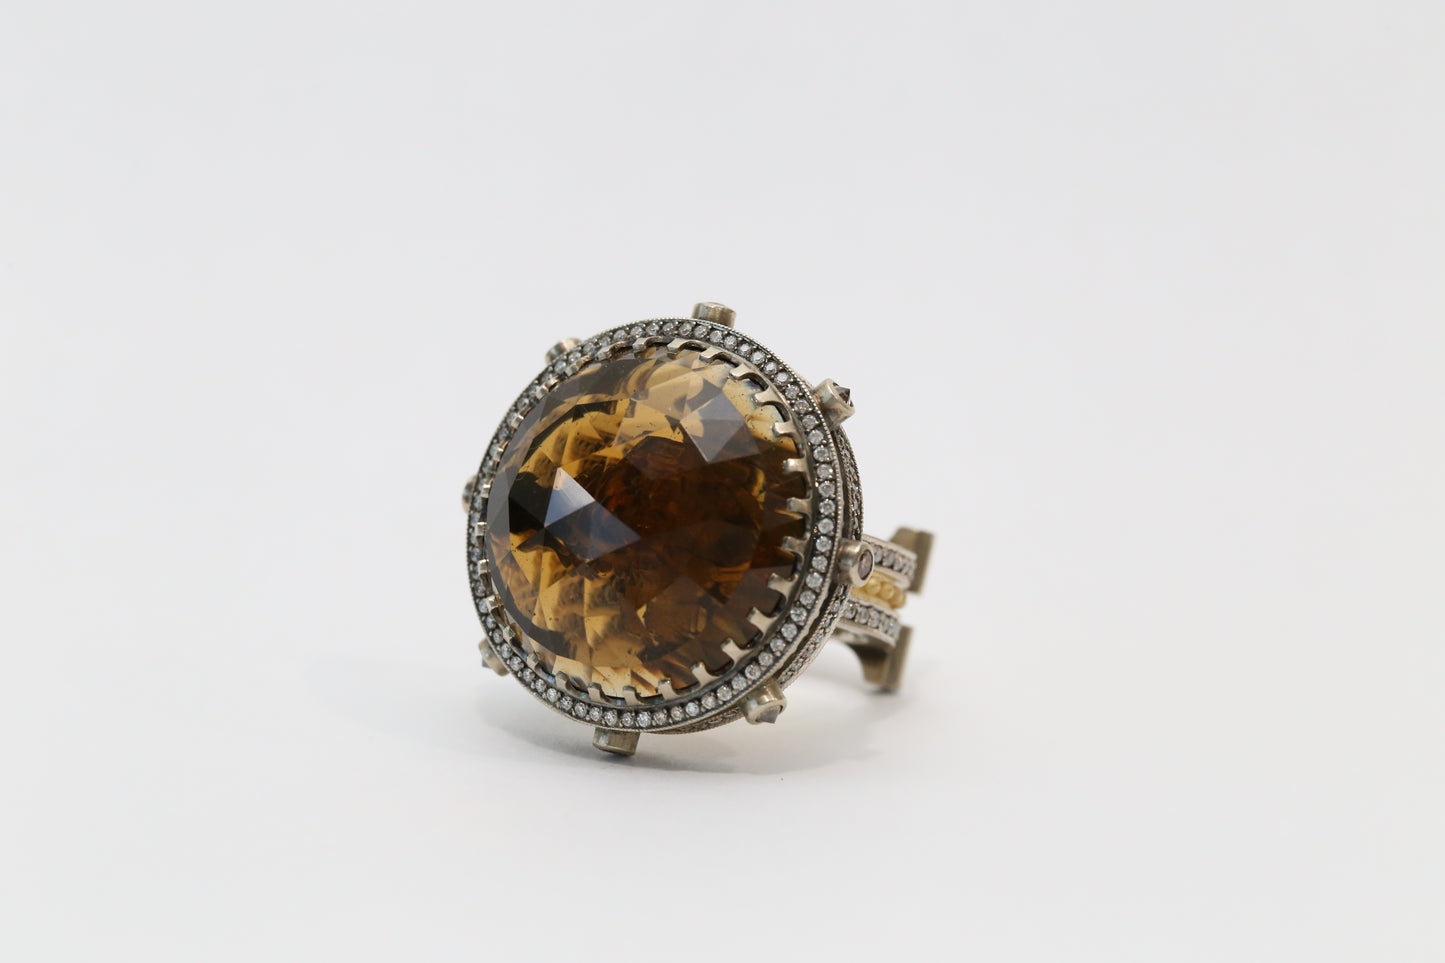 14k White & Yellow Gold Large Smoky Quartz Ring with Diamonds, Size 8 - 32.9g